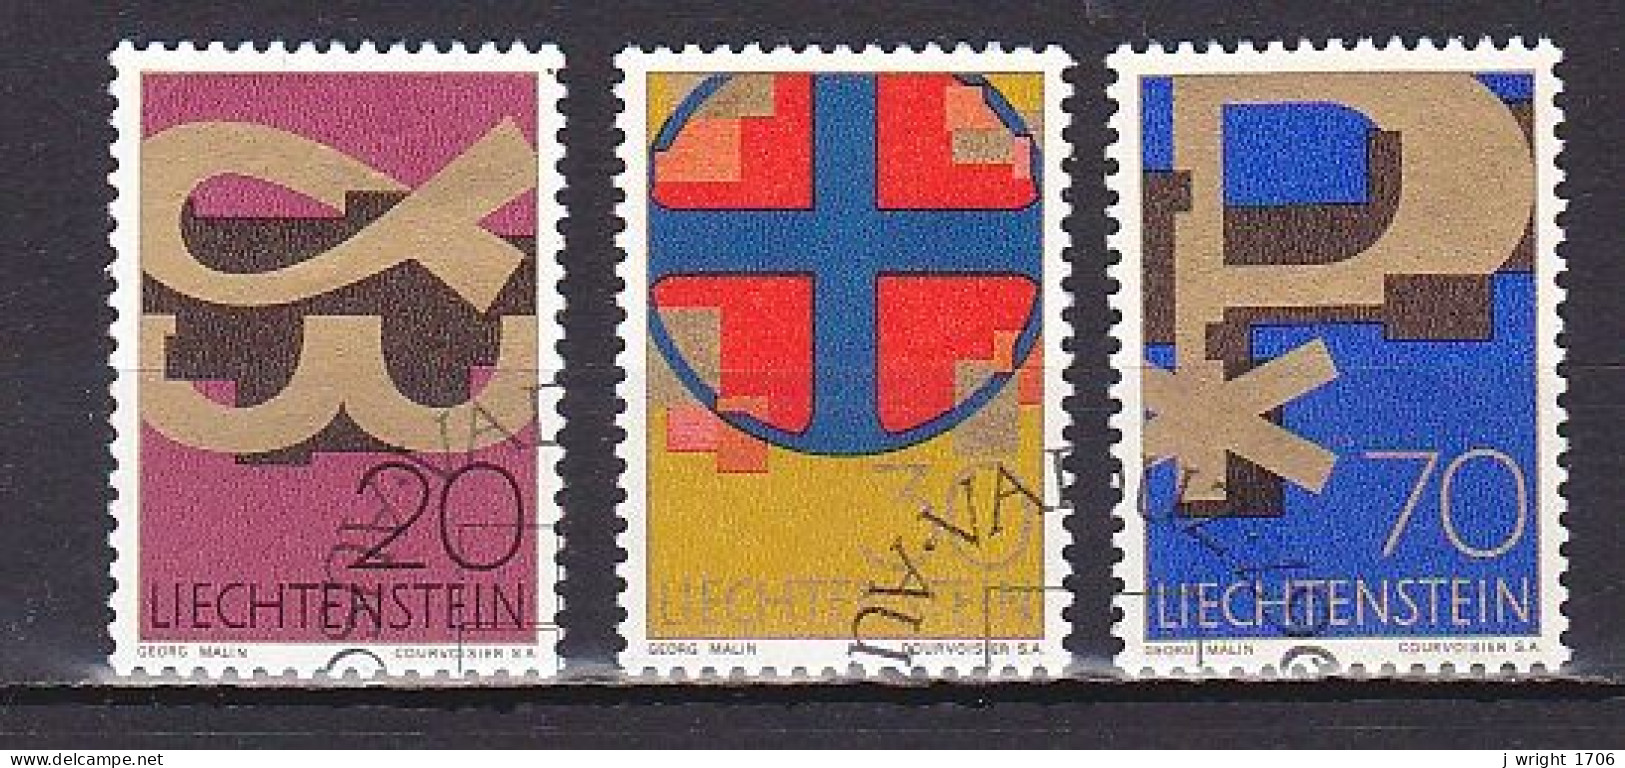 Liechtenstein, 1967, Christian Symbols, Set, CTO - Gebruikt